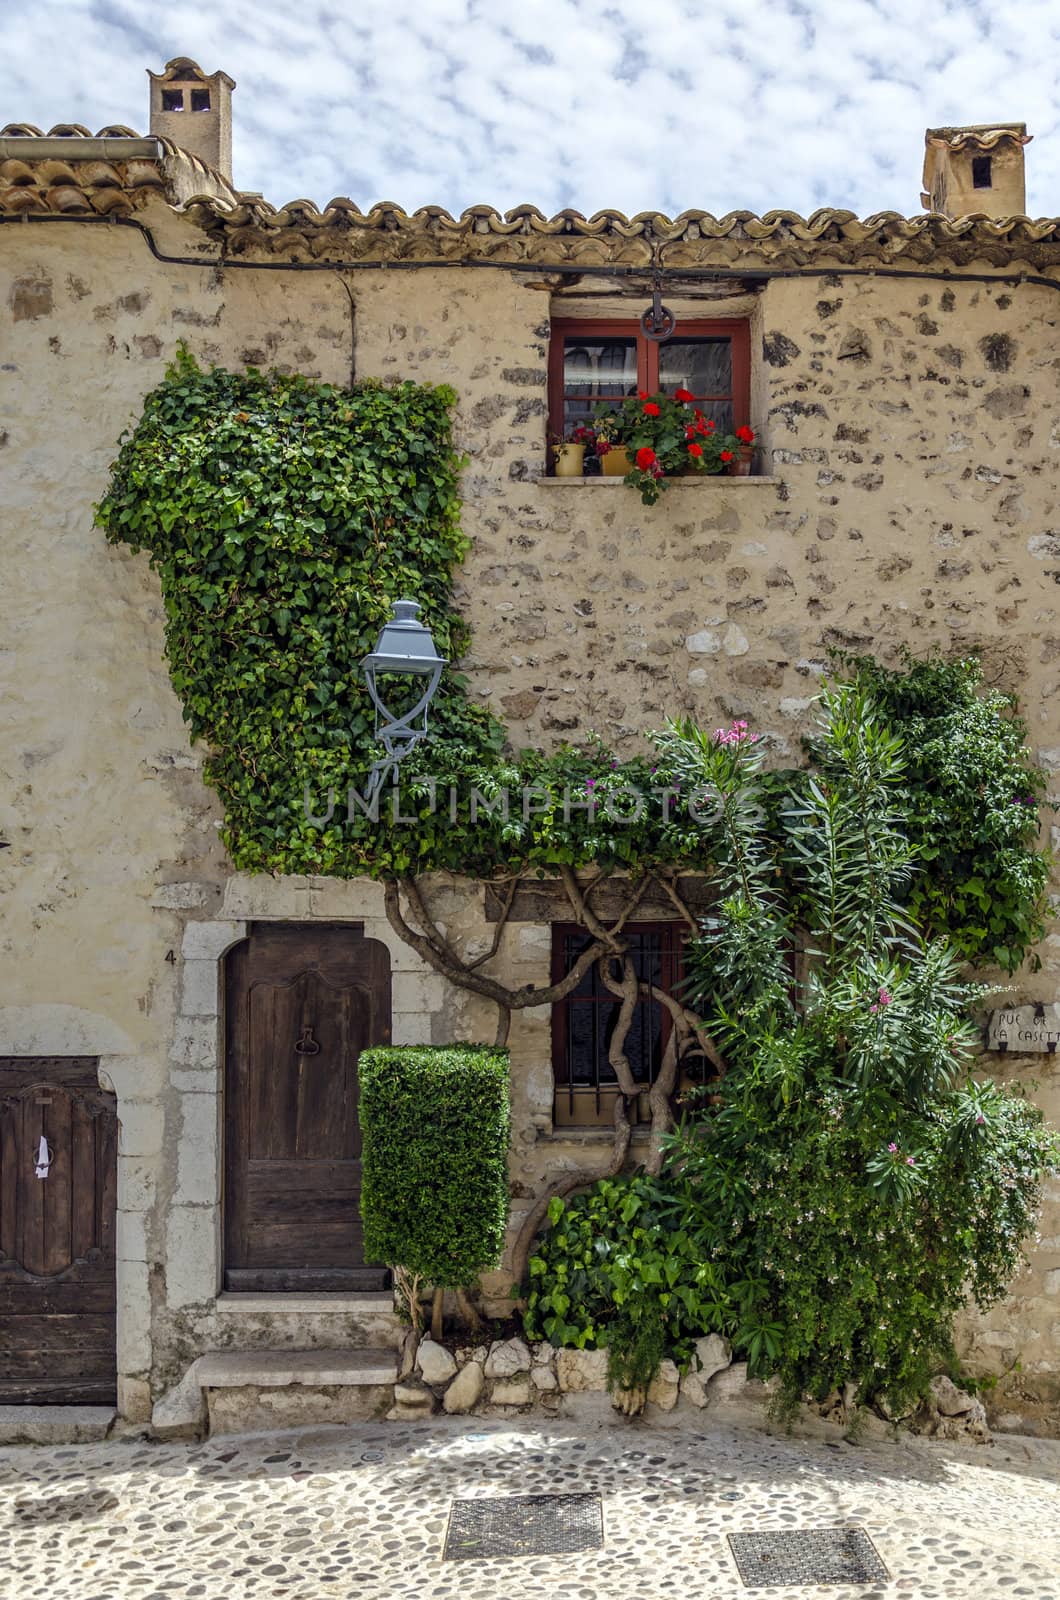 Rural scene from St. Paul in Provence, France.